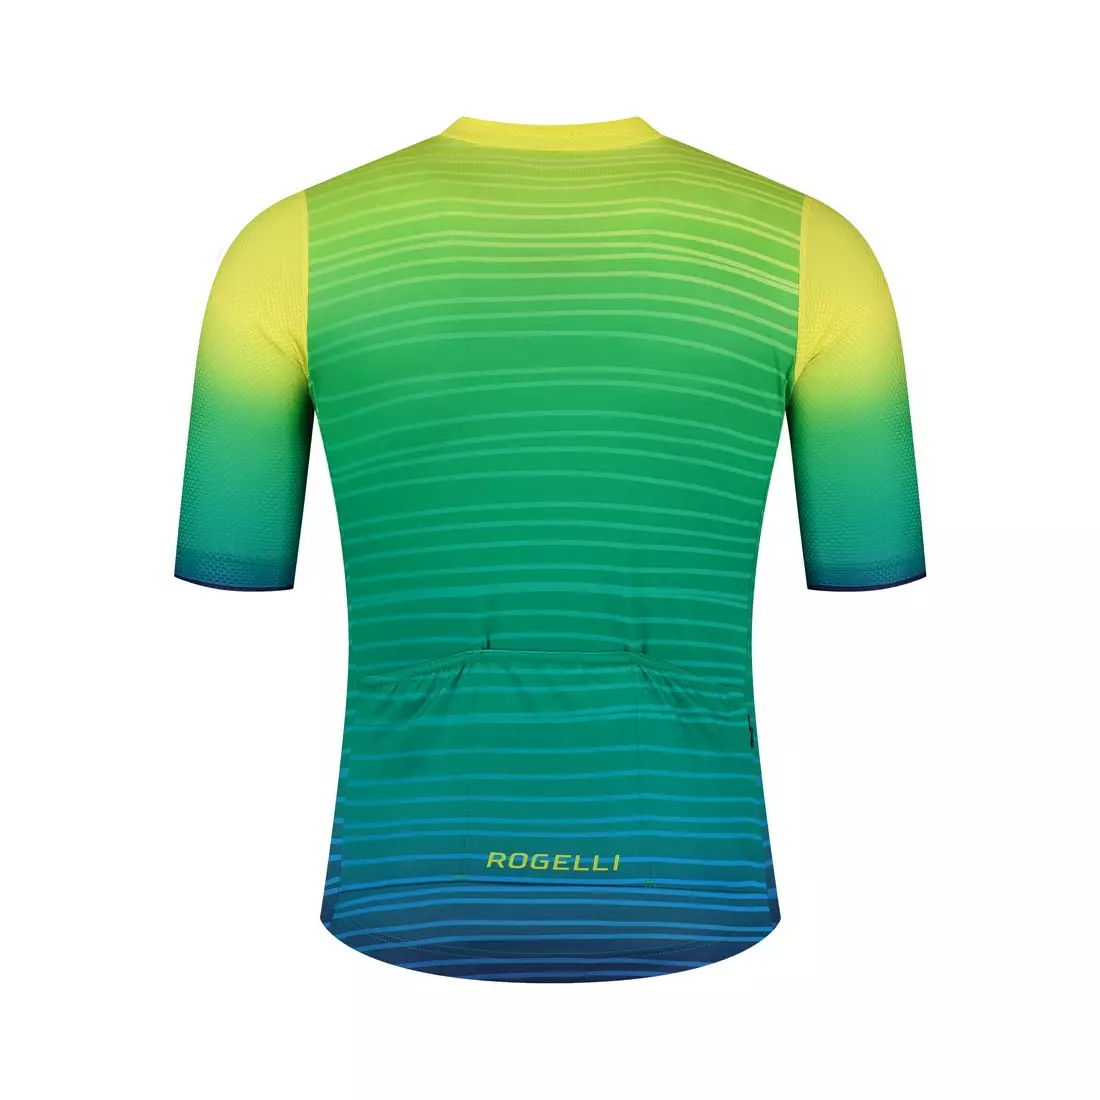 ROGELLI SURF men's bicycle t-shirt, green-yellow